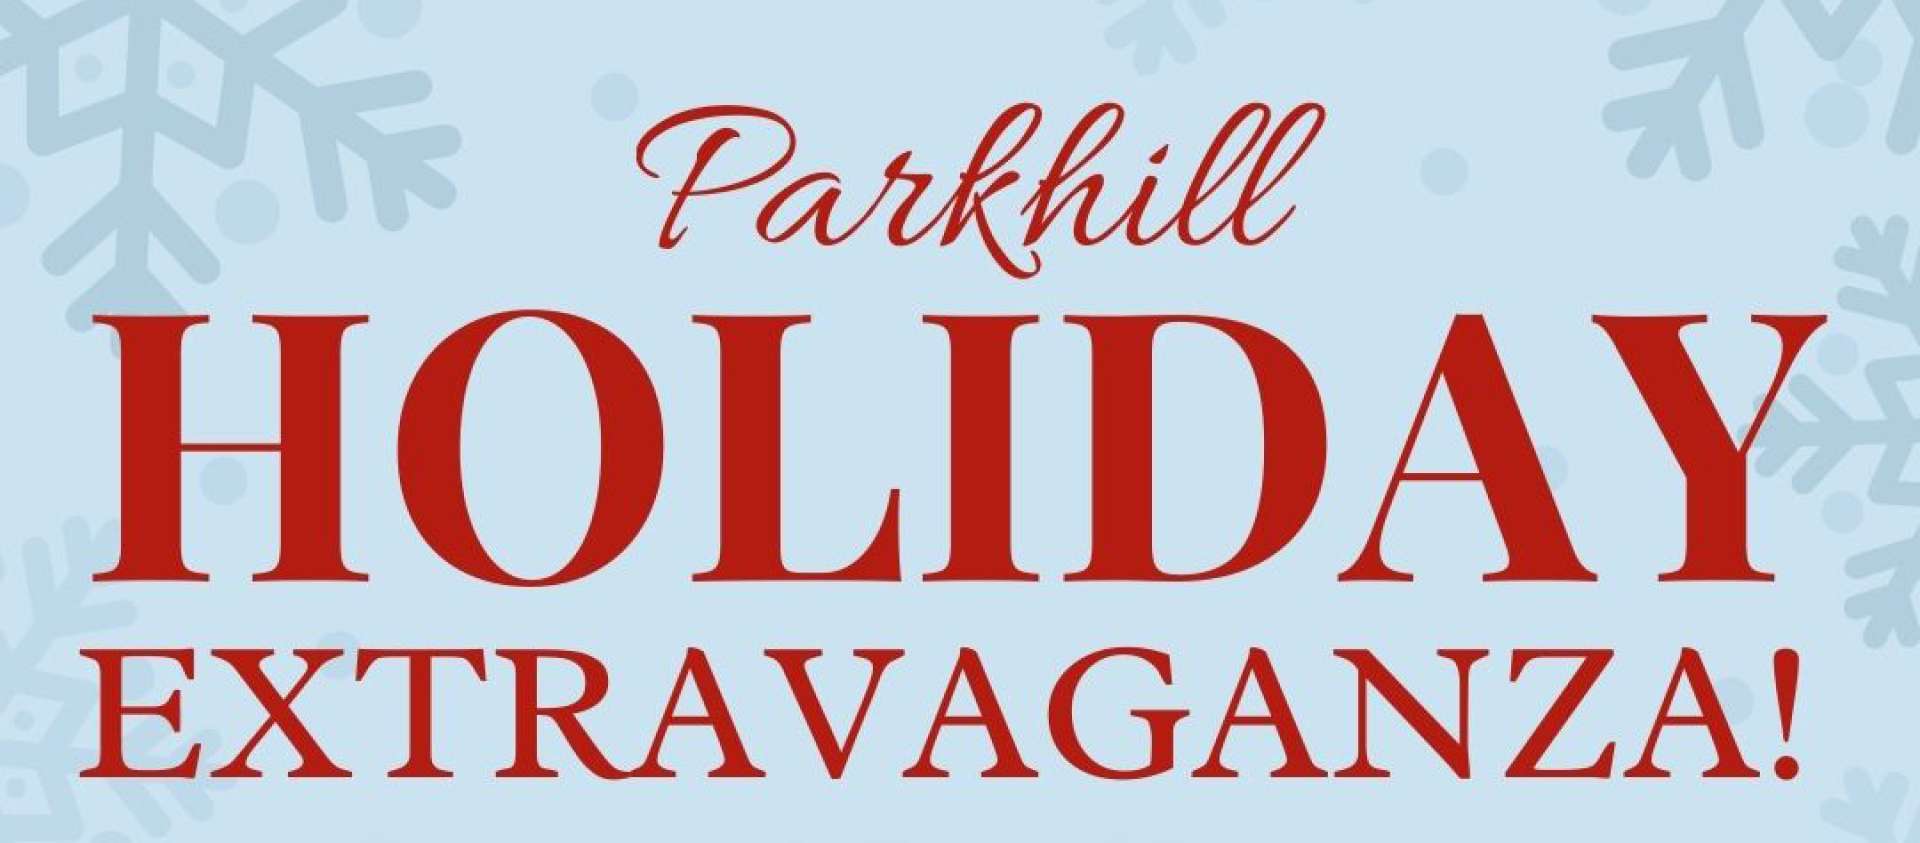 Parkhill Holiday Extravaganza